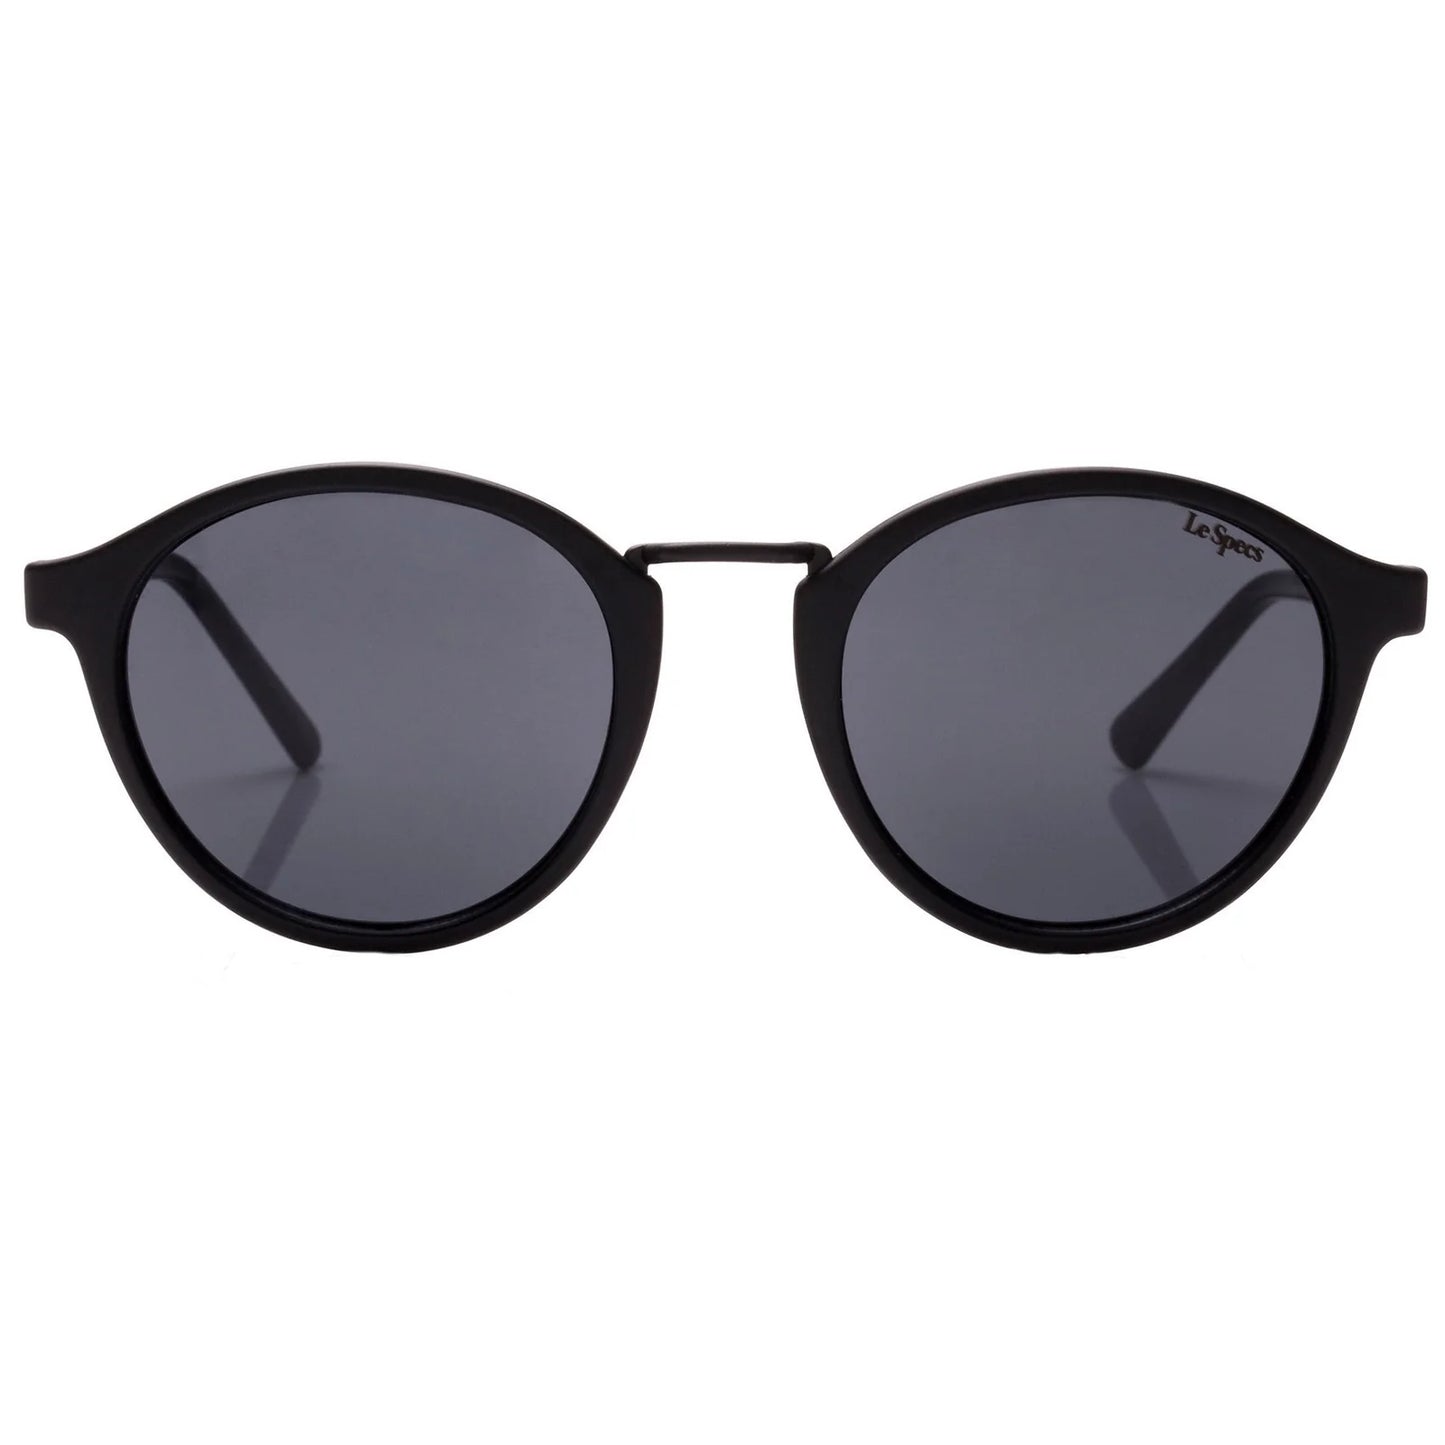 Paradox Sunglasses - Matte Black